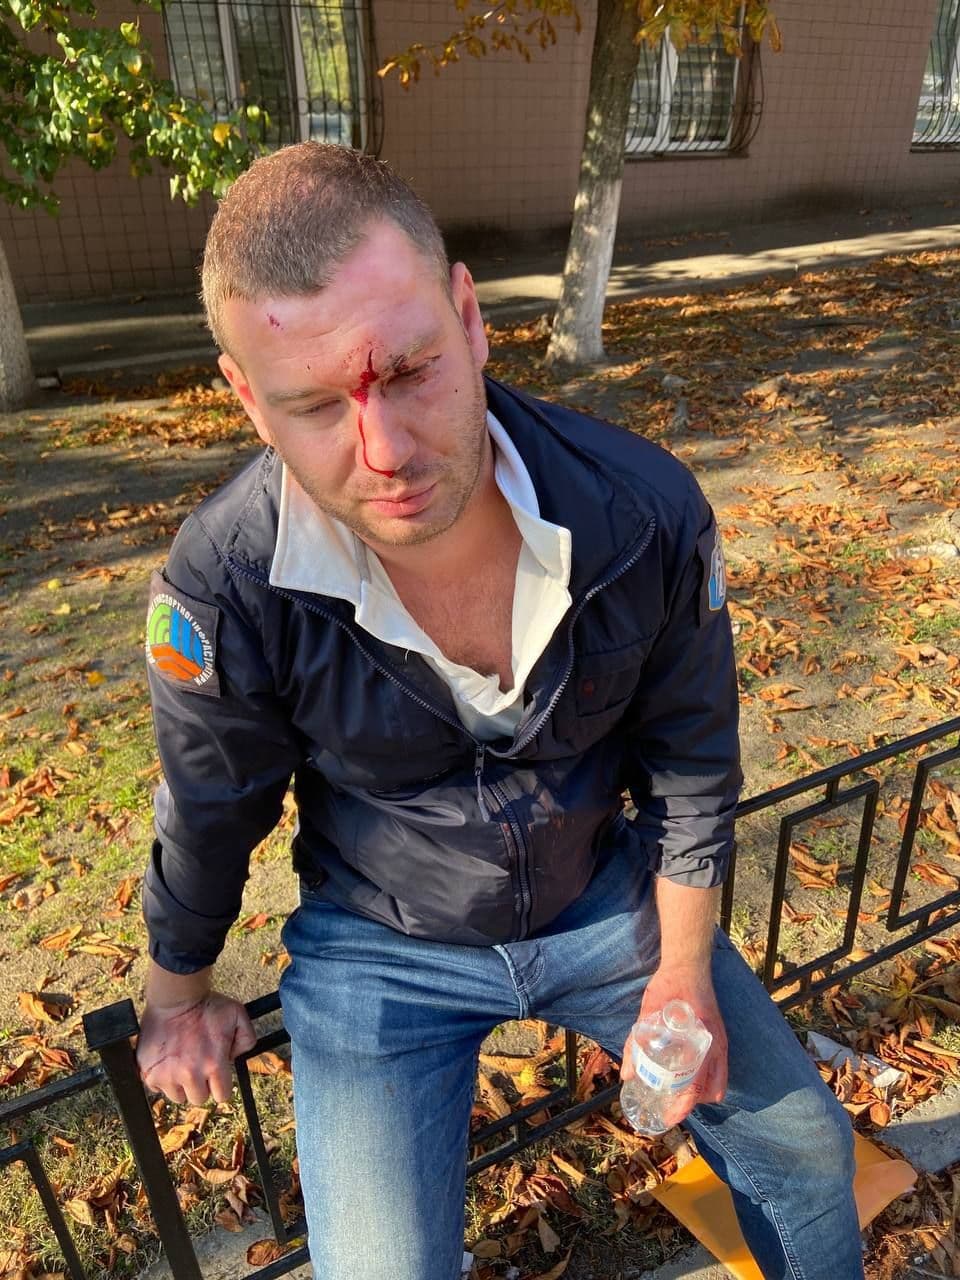 В Киеве избили инспектора по парковке (фото)